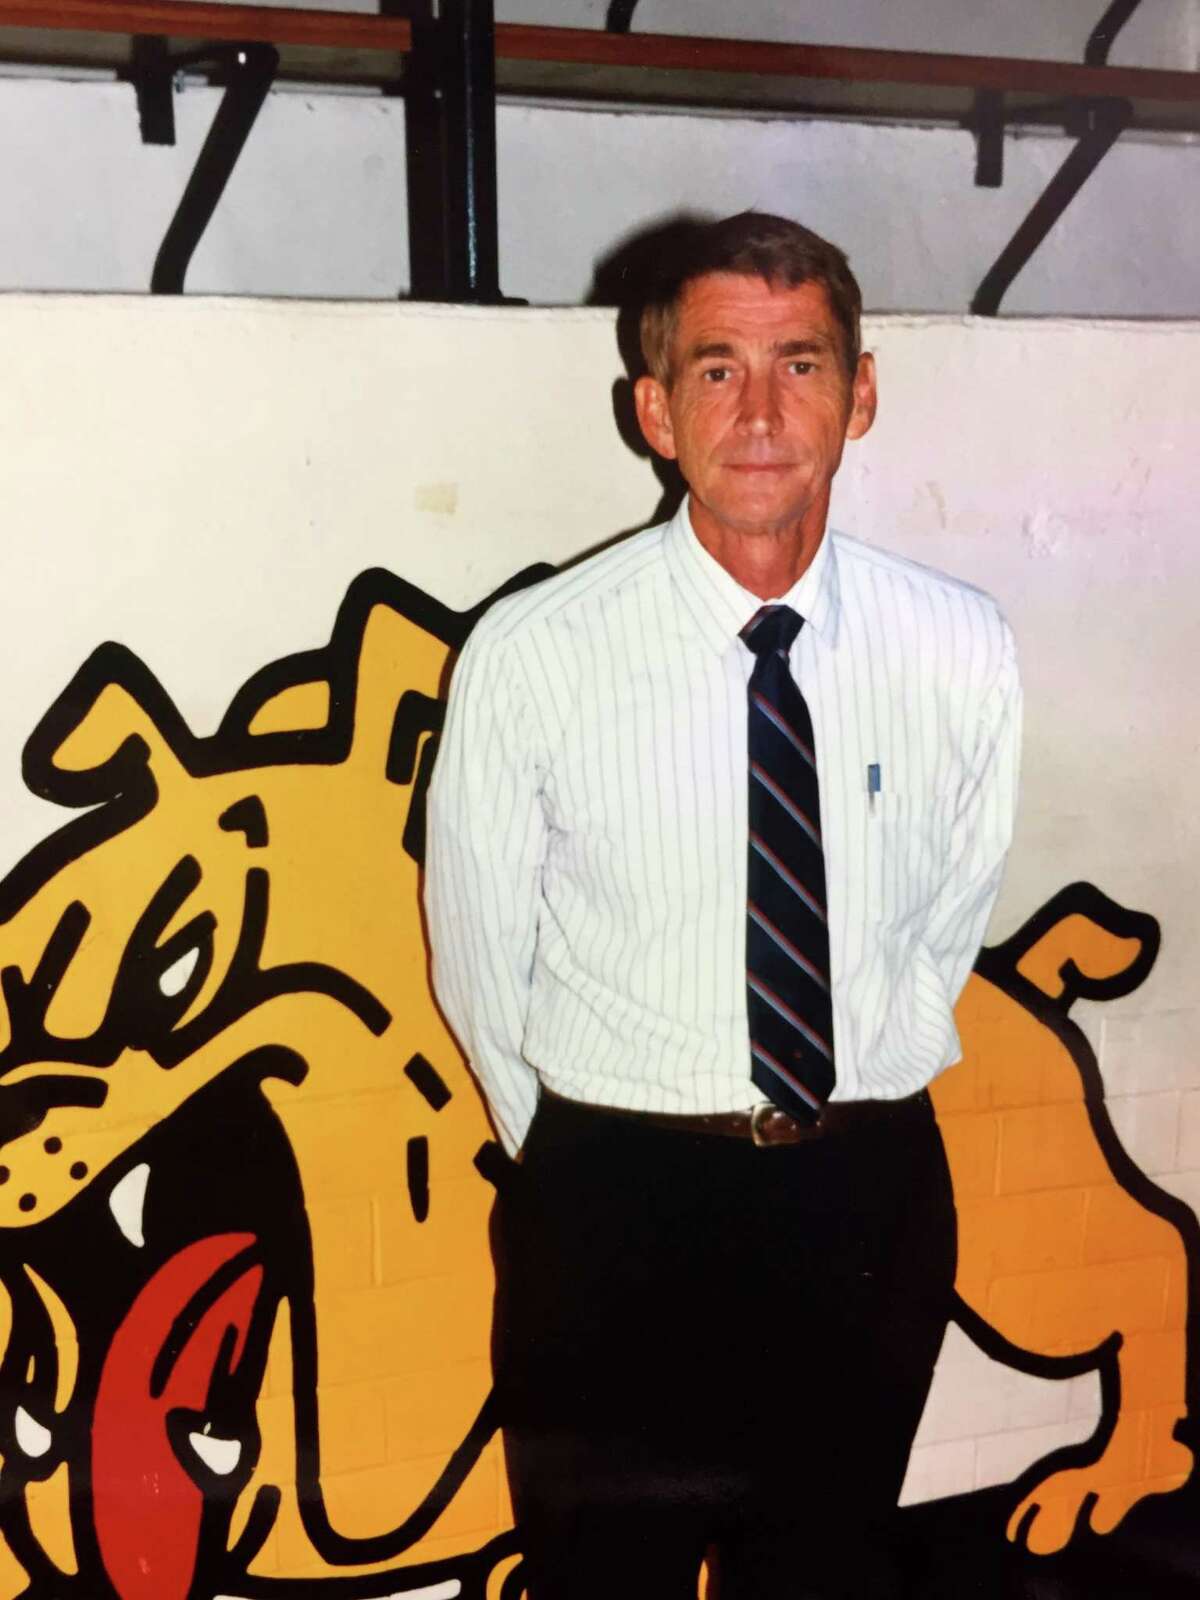 Texas Lutheran men’s basketball coach Jim Shuler poses for a photo at Memorial Gym in Seguin in 1998.